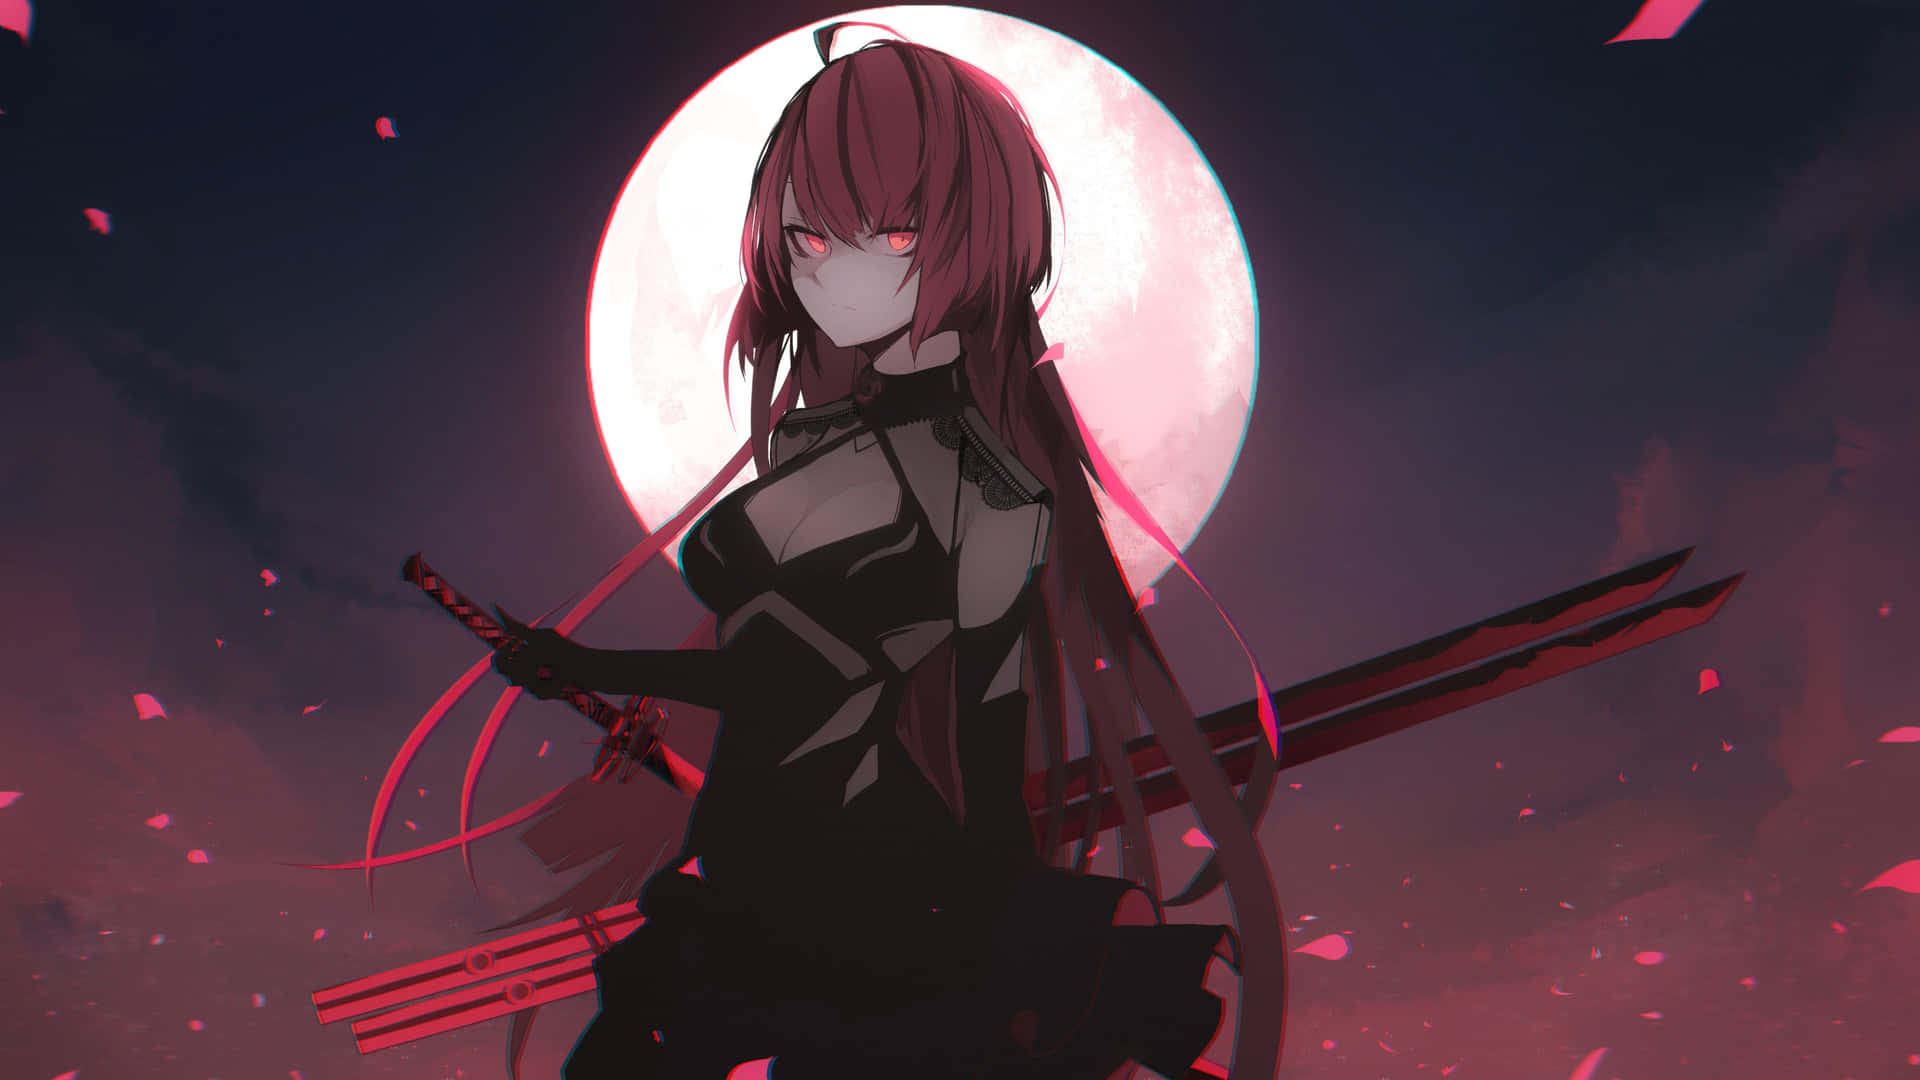 Cool Anime Character Anime Girl Red Aesthetic Moon Wallpaper